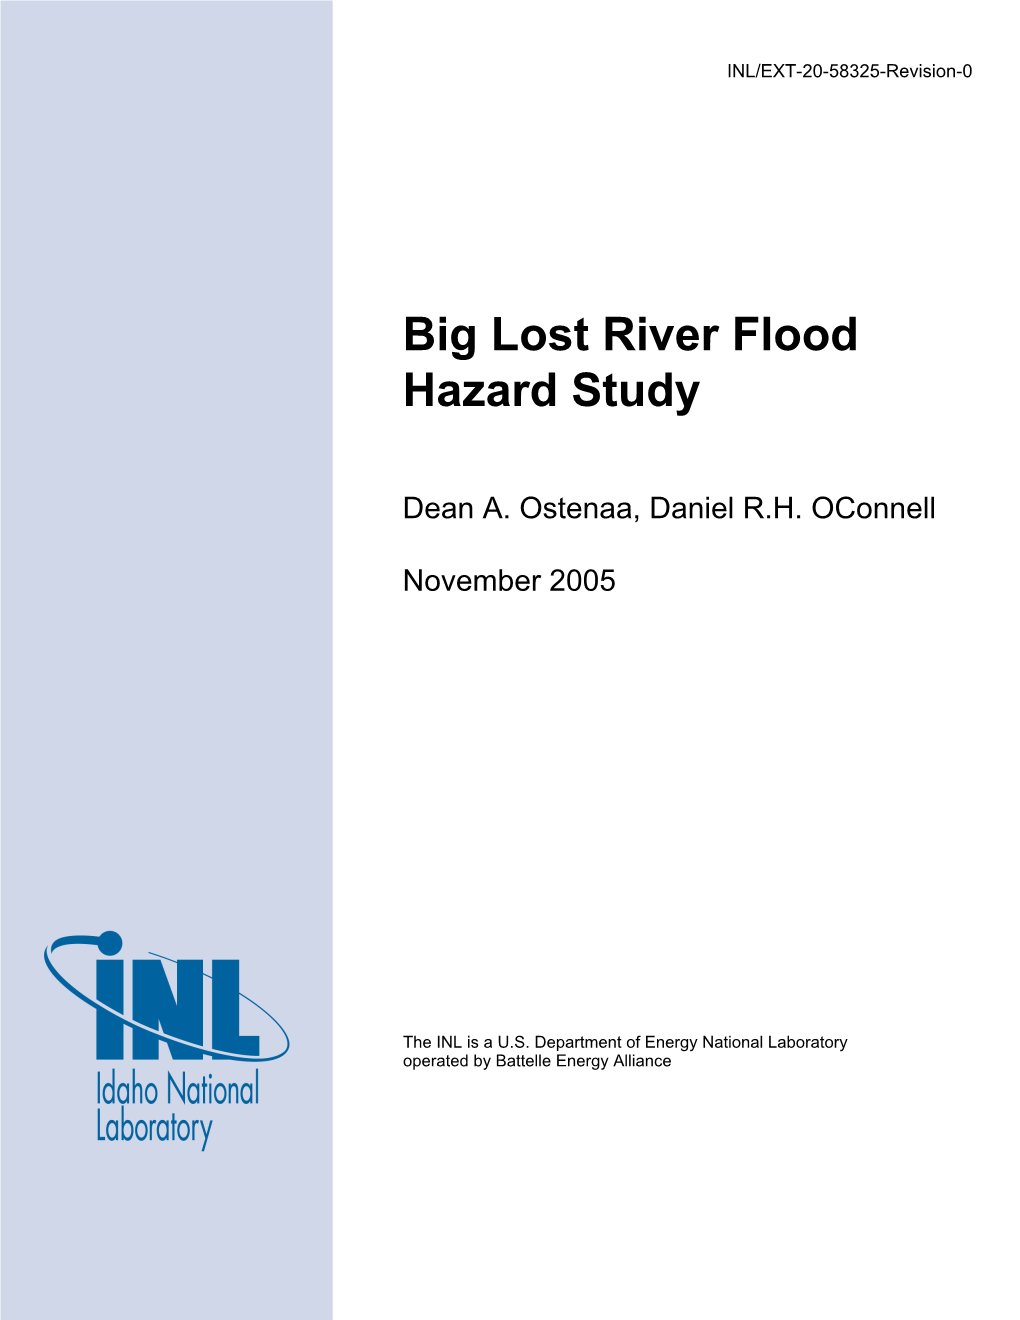 Big Lost River Flood Hazard Study